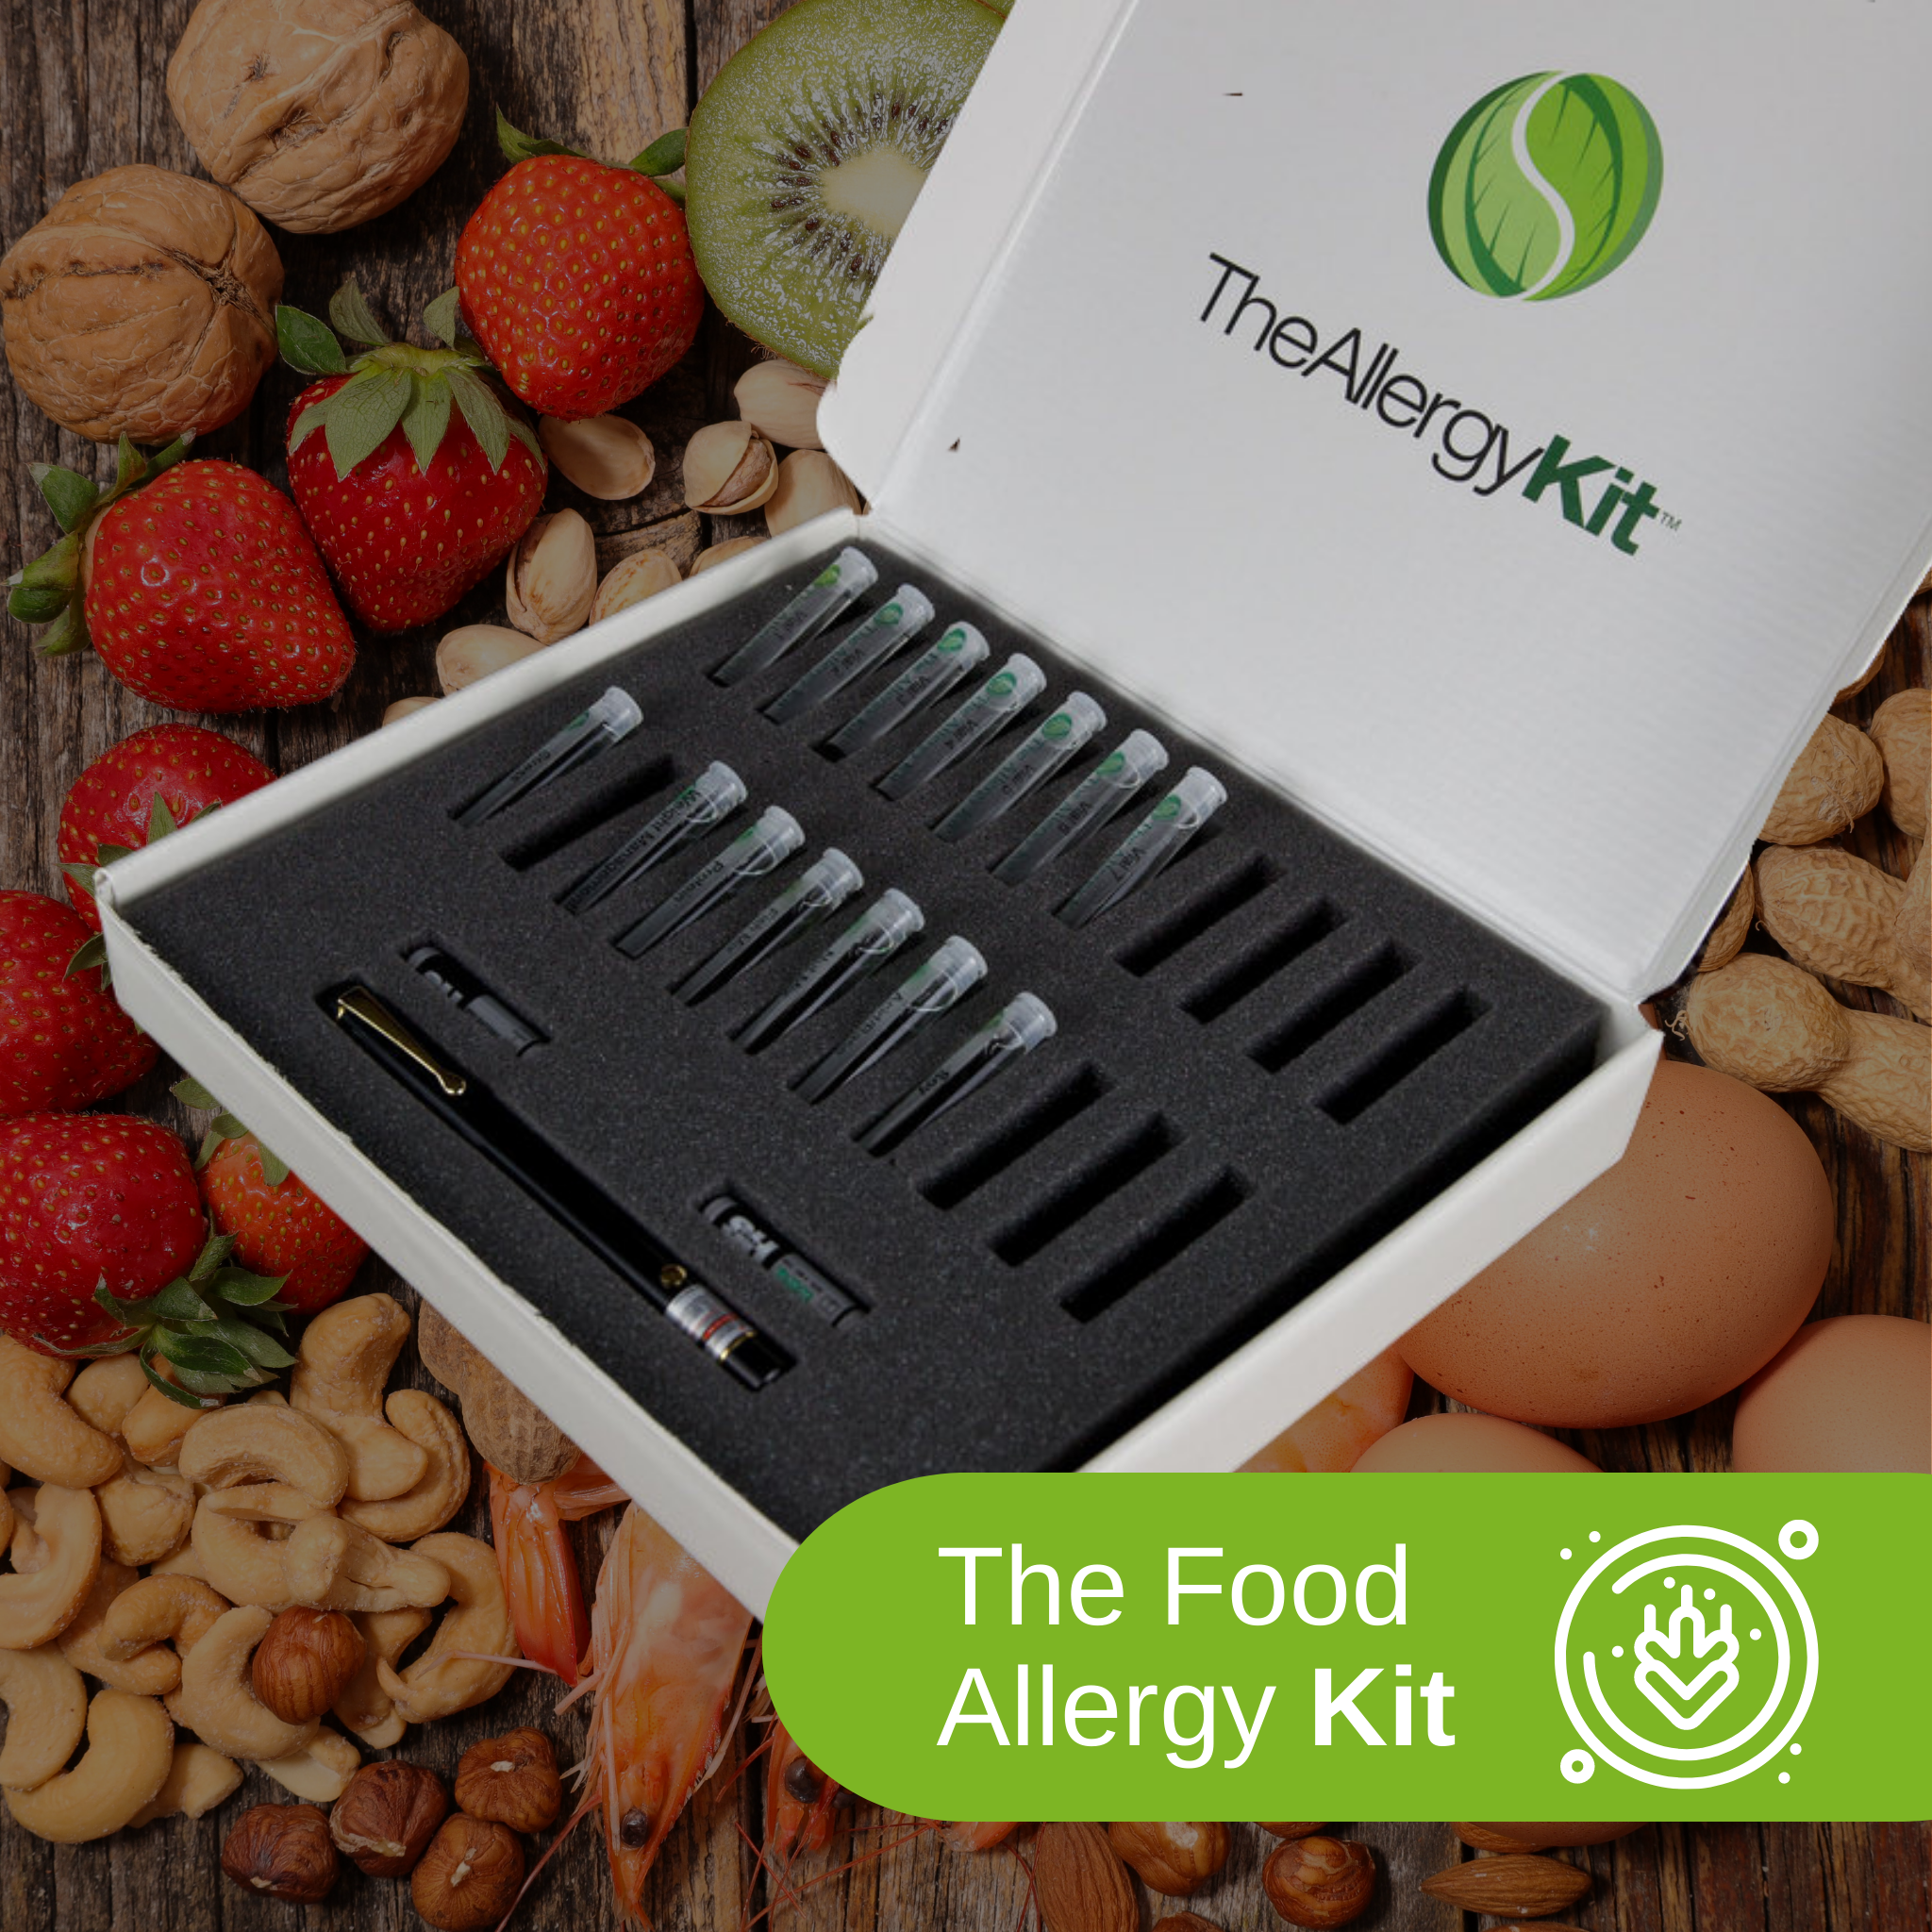 The Food Allergy Kit